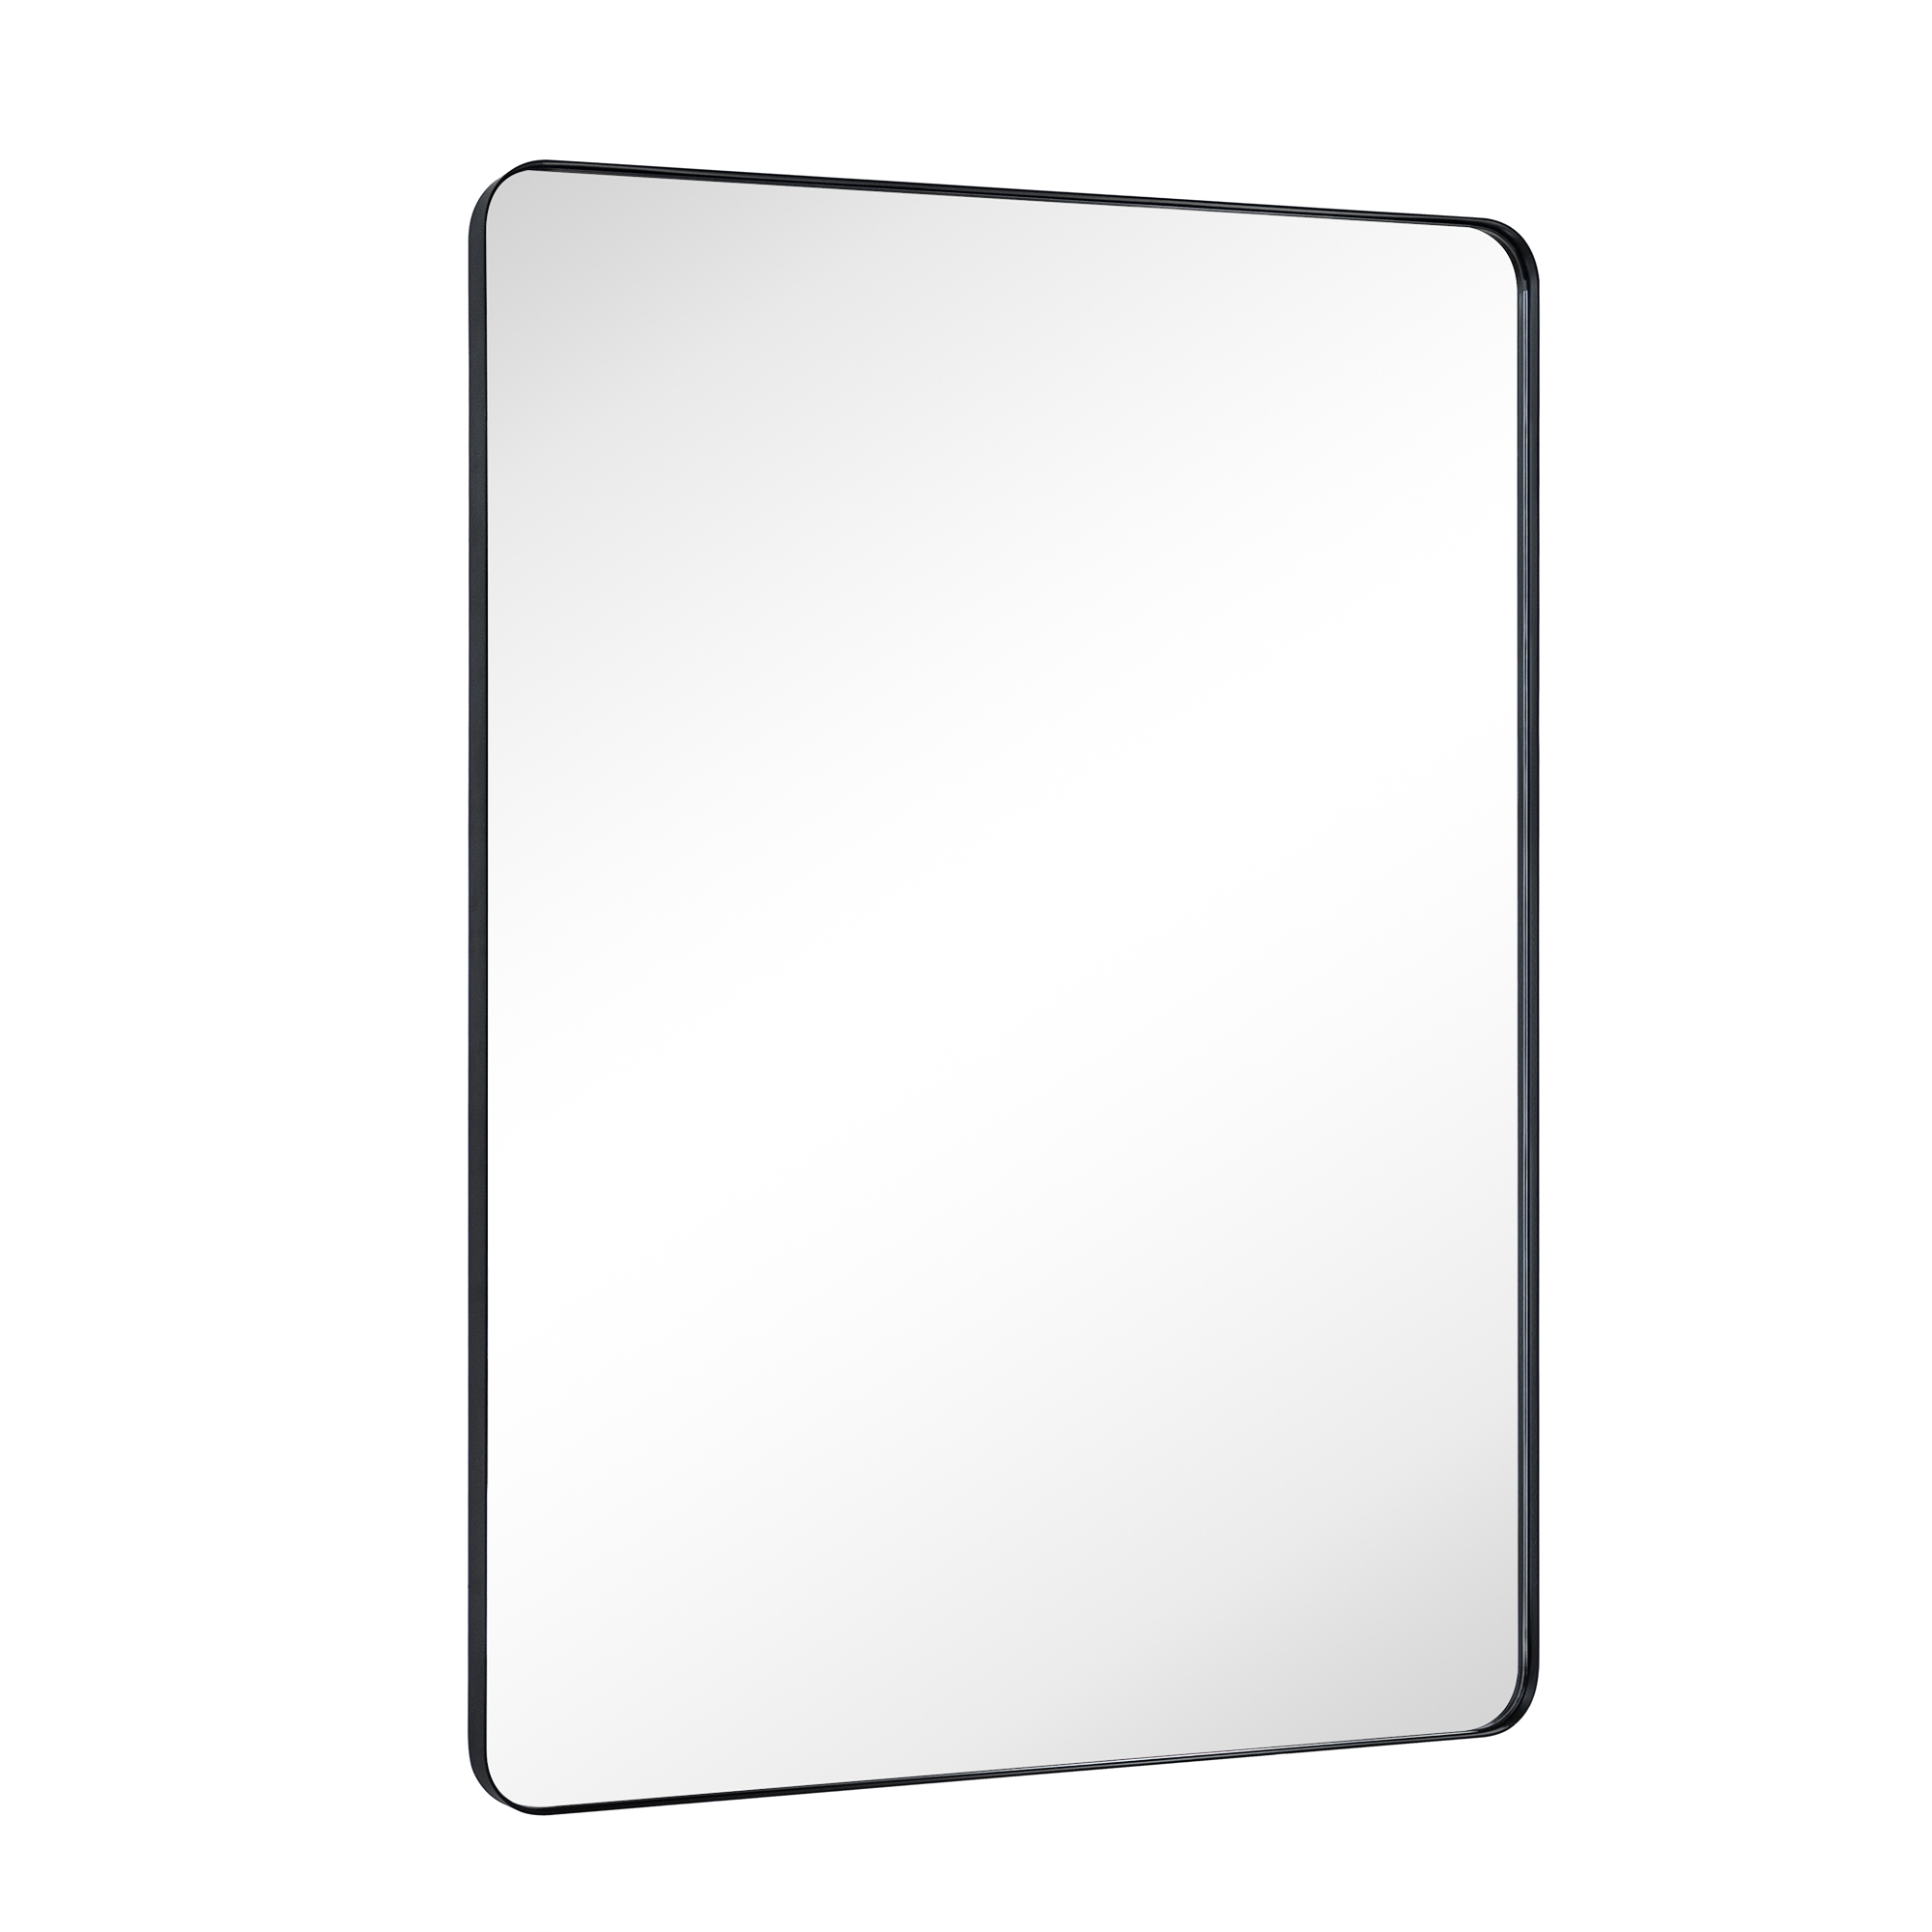 Kengston Modern & Contemporary Rectangular Bathroom Vanity Mirrors-36x48-Black